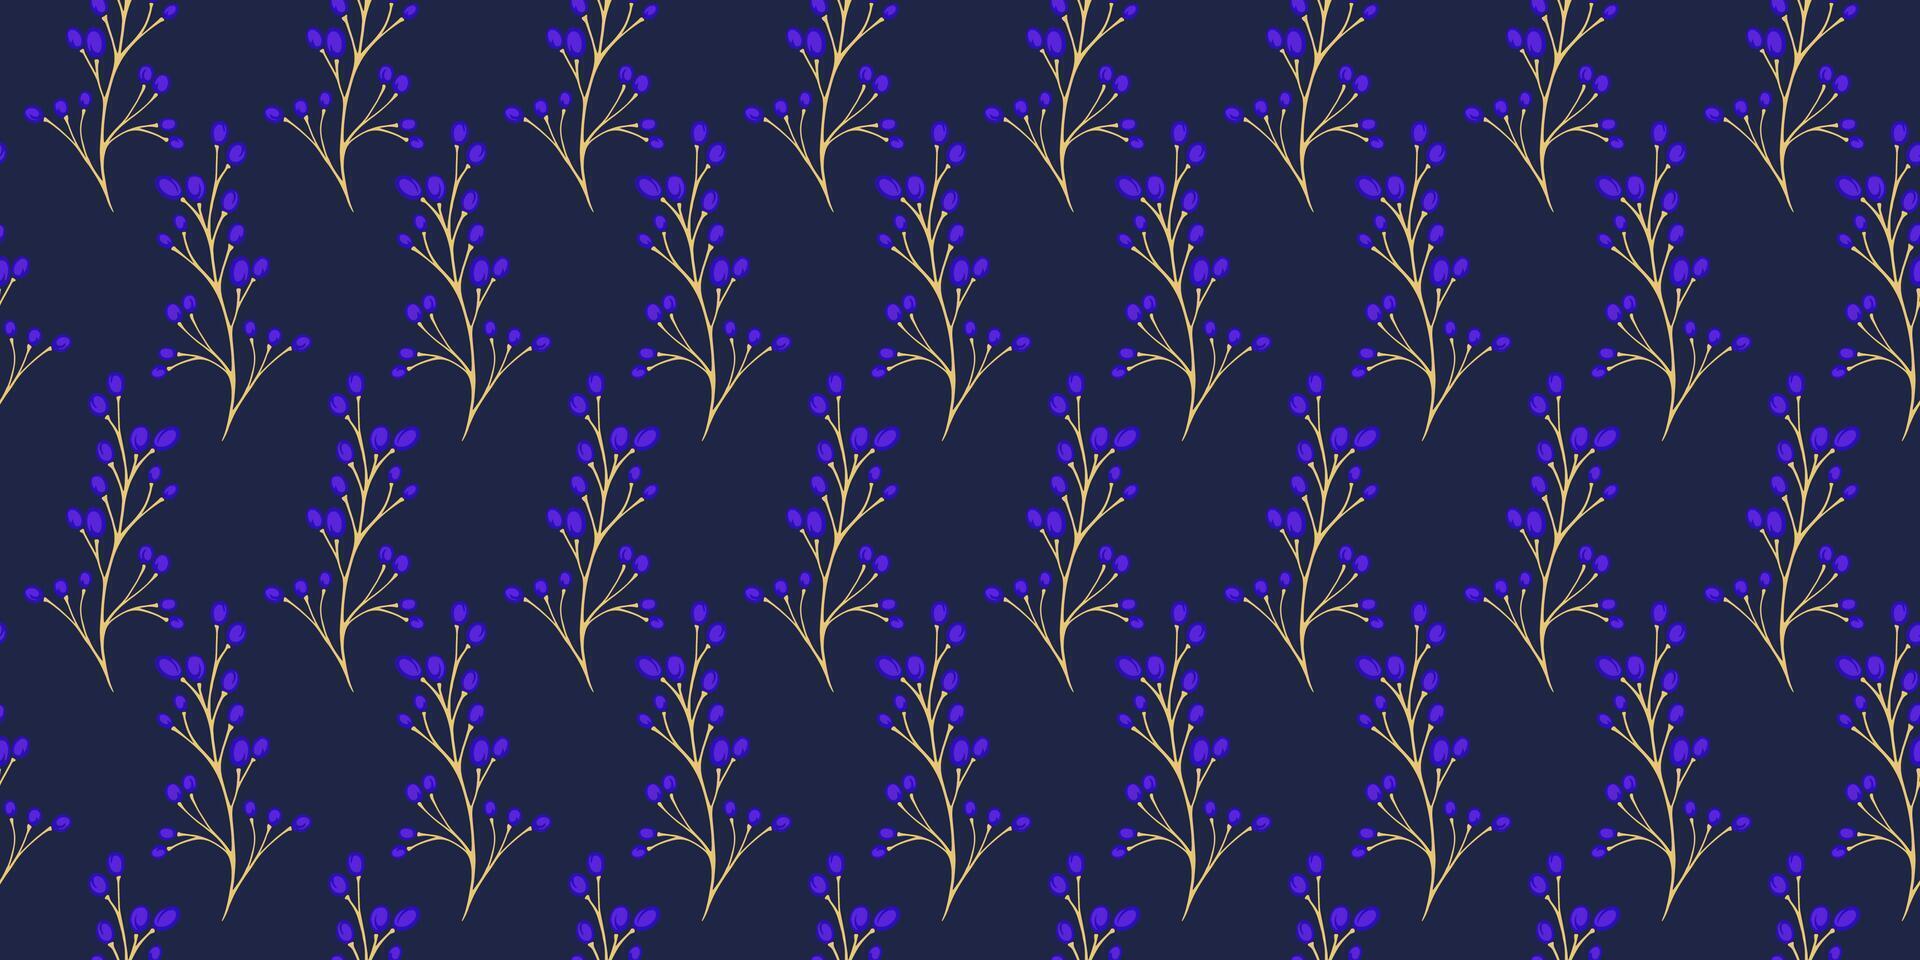 monótonos oscuro azul sin costura modelo estilizado ramas con resumen bayas. creativo minúsculo floral tallos con formas gotas, puntos, lugares modelo. vector mano dibujado bosquejo. collage para diseños